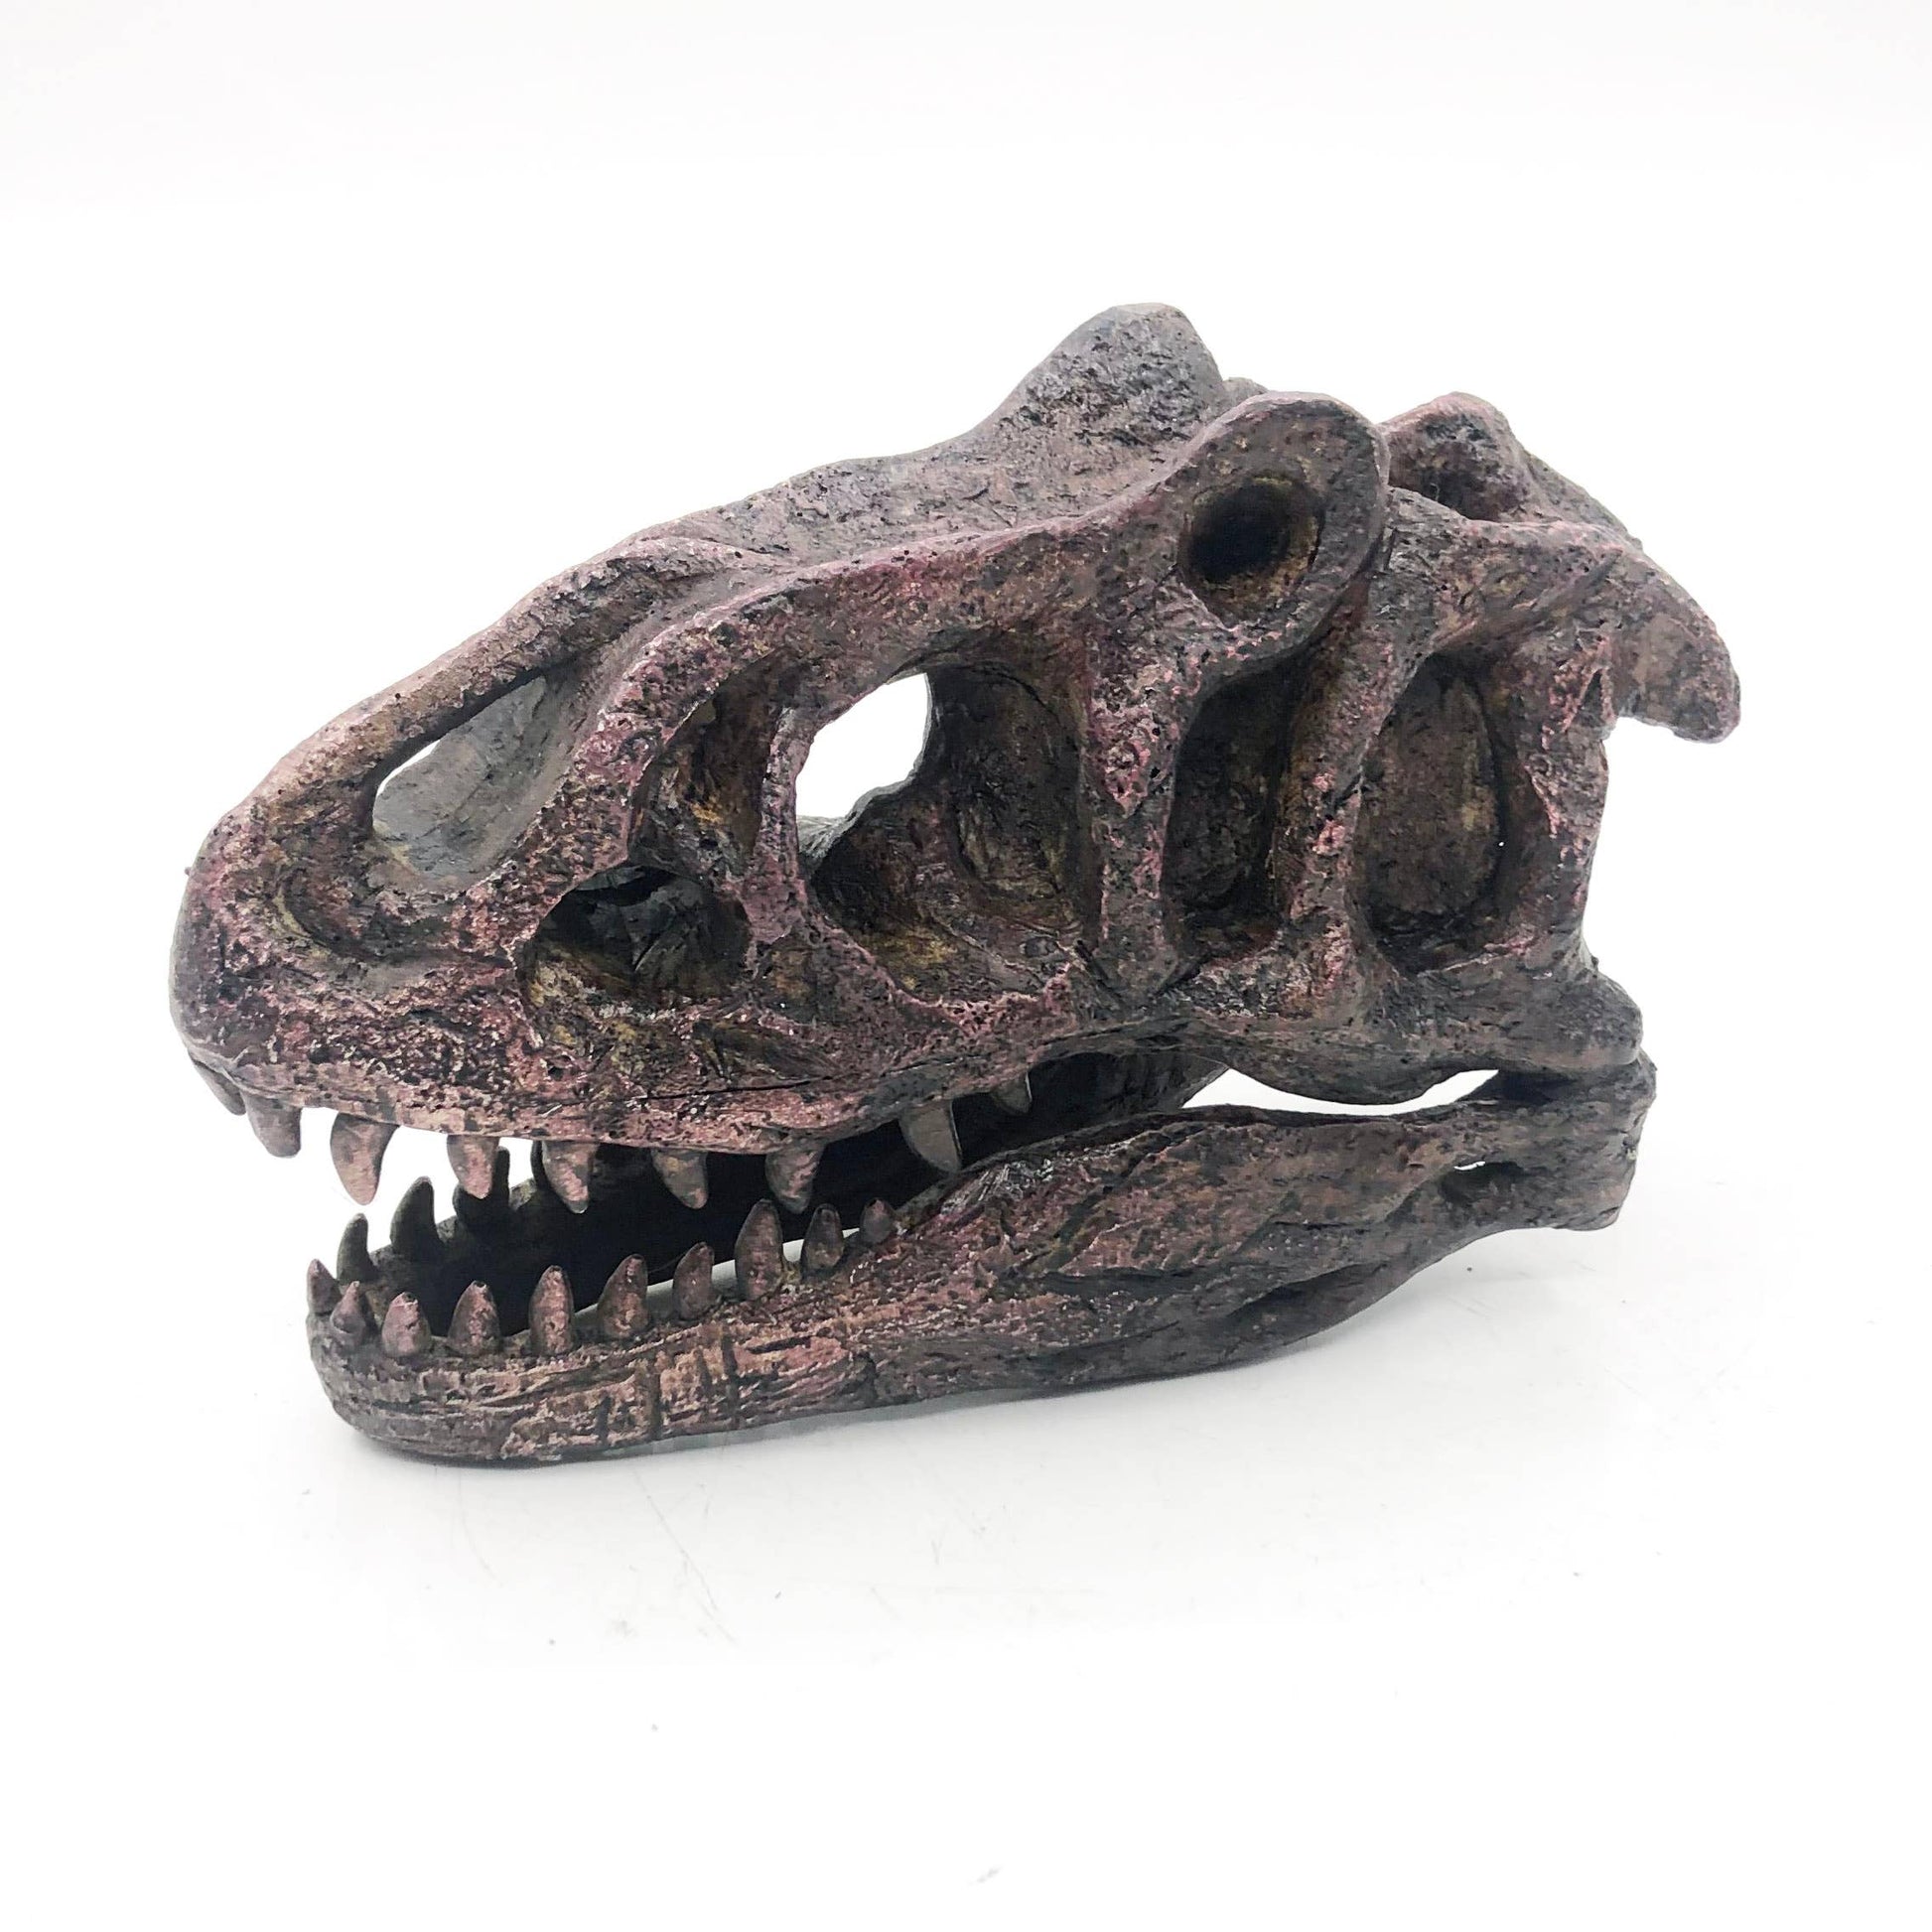 Replica Allosaurus Mini Dinosaur Fossil Skull - Stemcell Science Shop